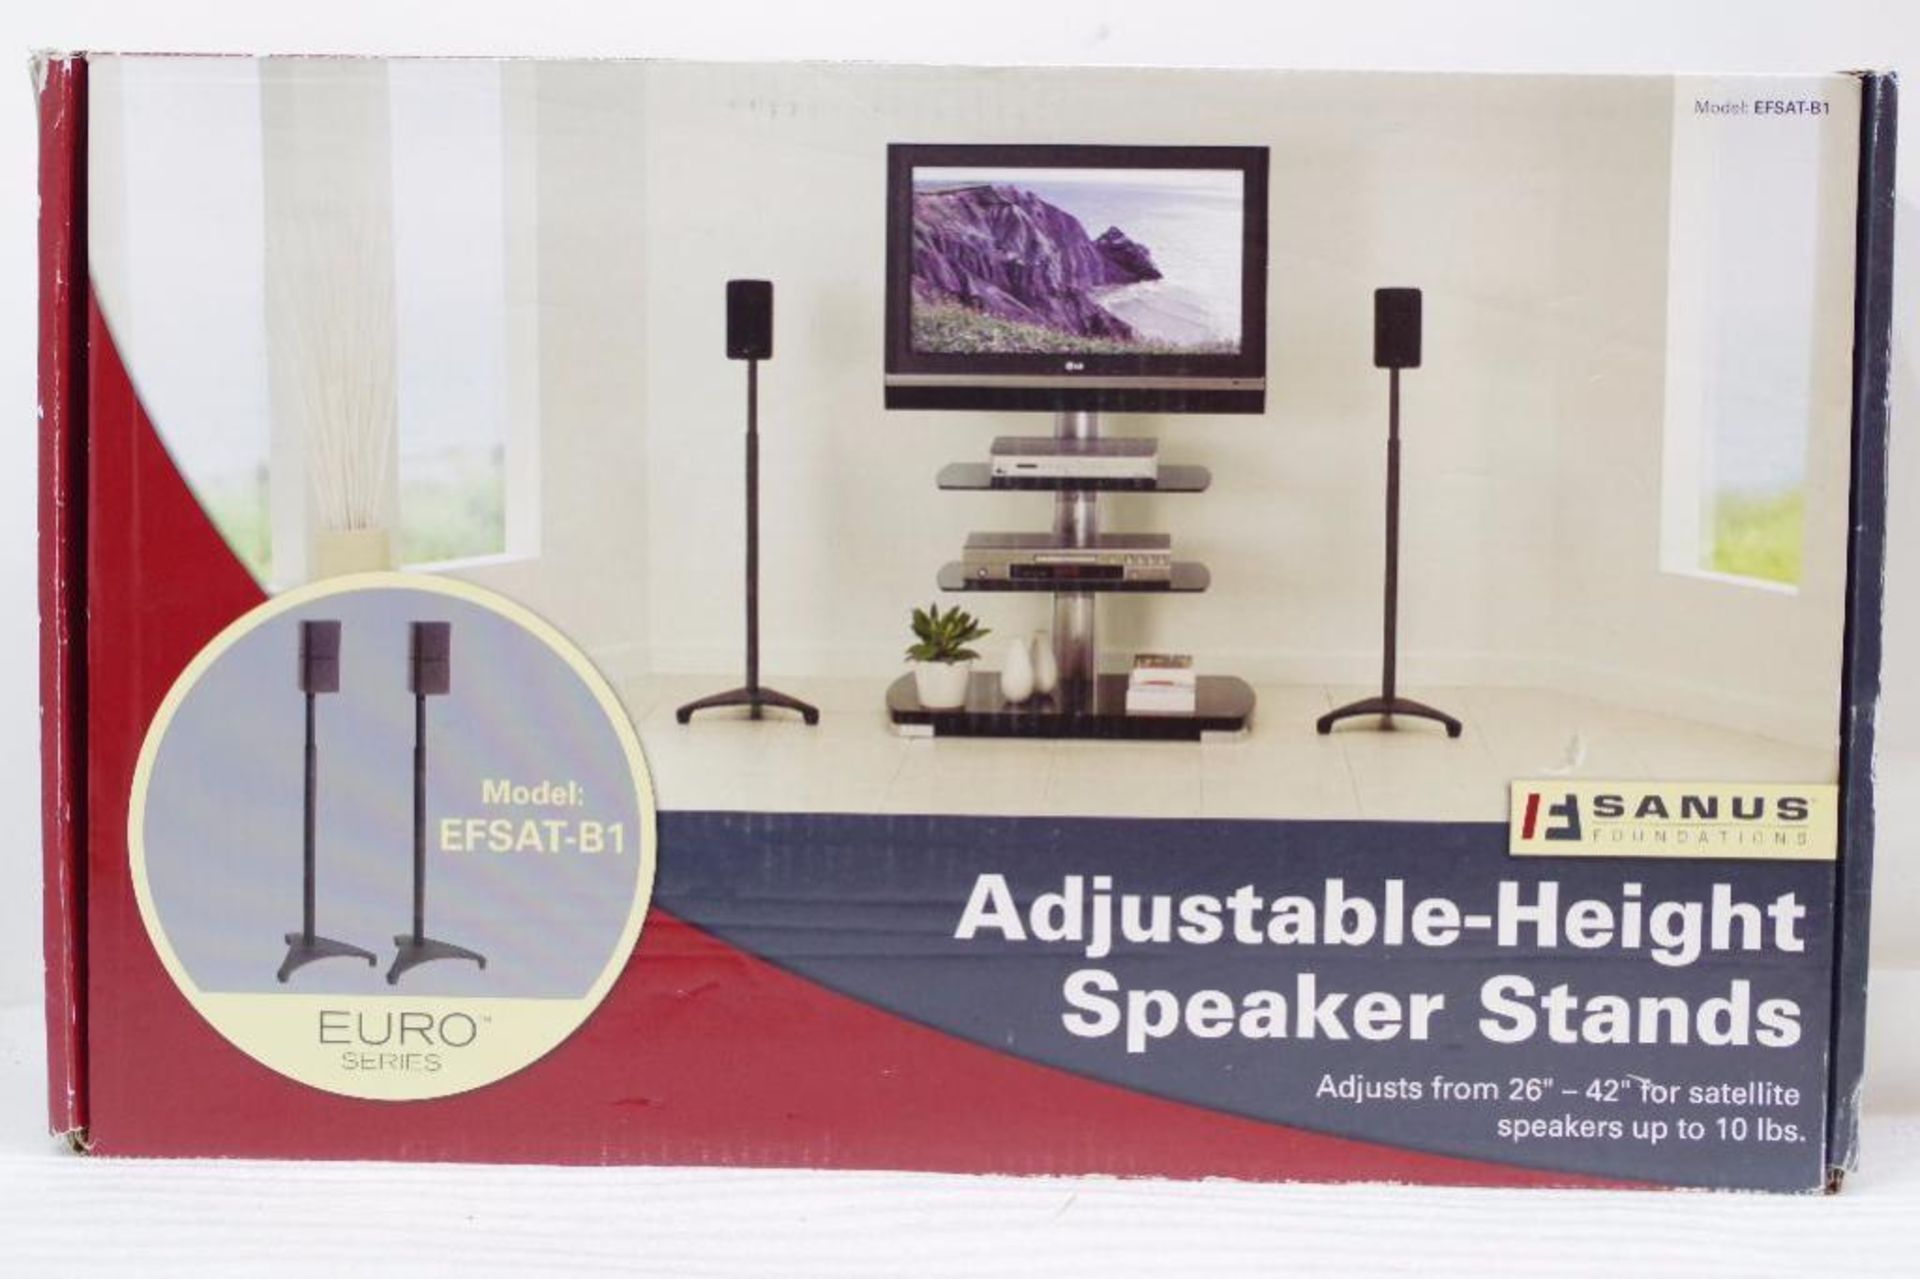 [2] SANUS FOUNDATION Adjustable-Height Speaker Stands M/N EFSAT-B1 (1 Box w/ 2 Stands)